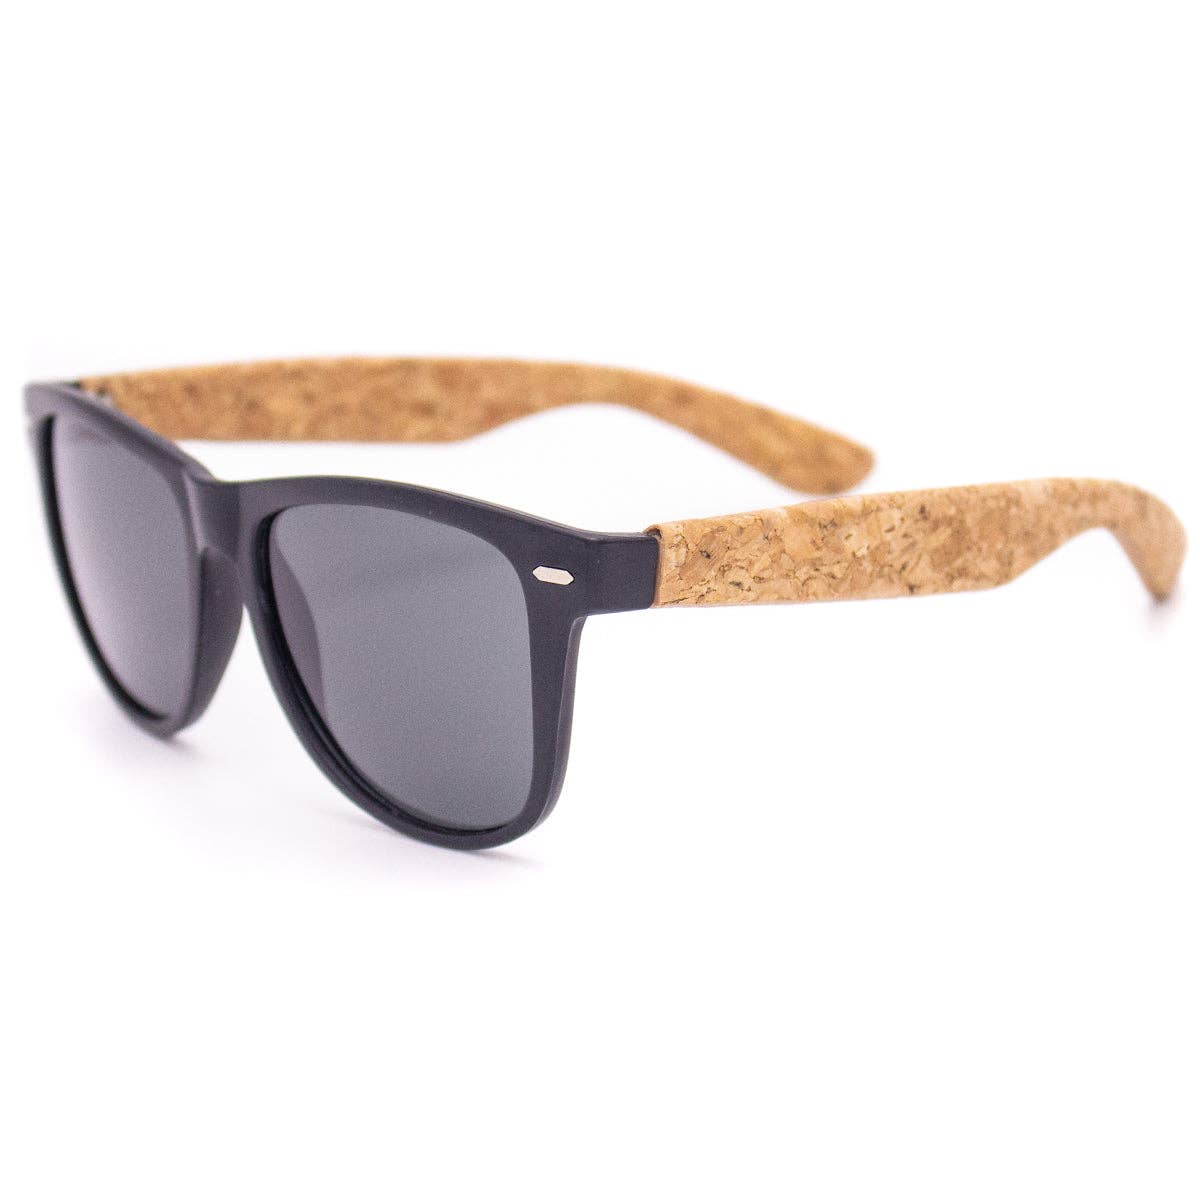 Cork UV protection eyewear (Including case) L-042 | L-057